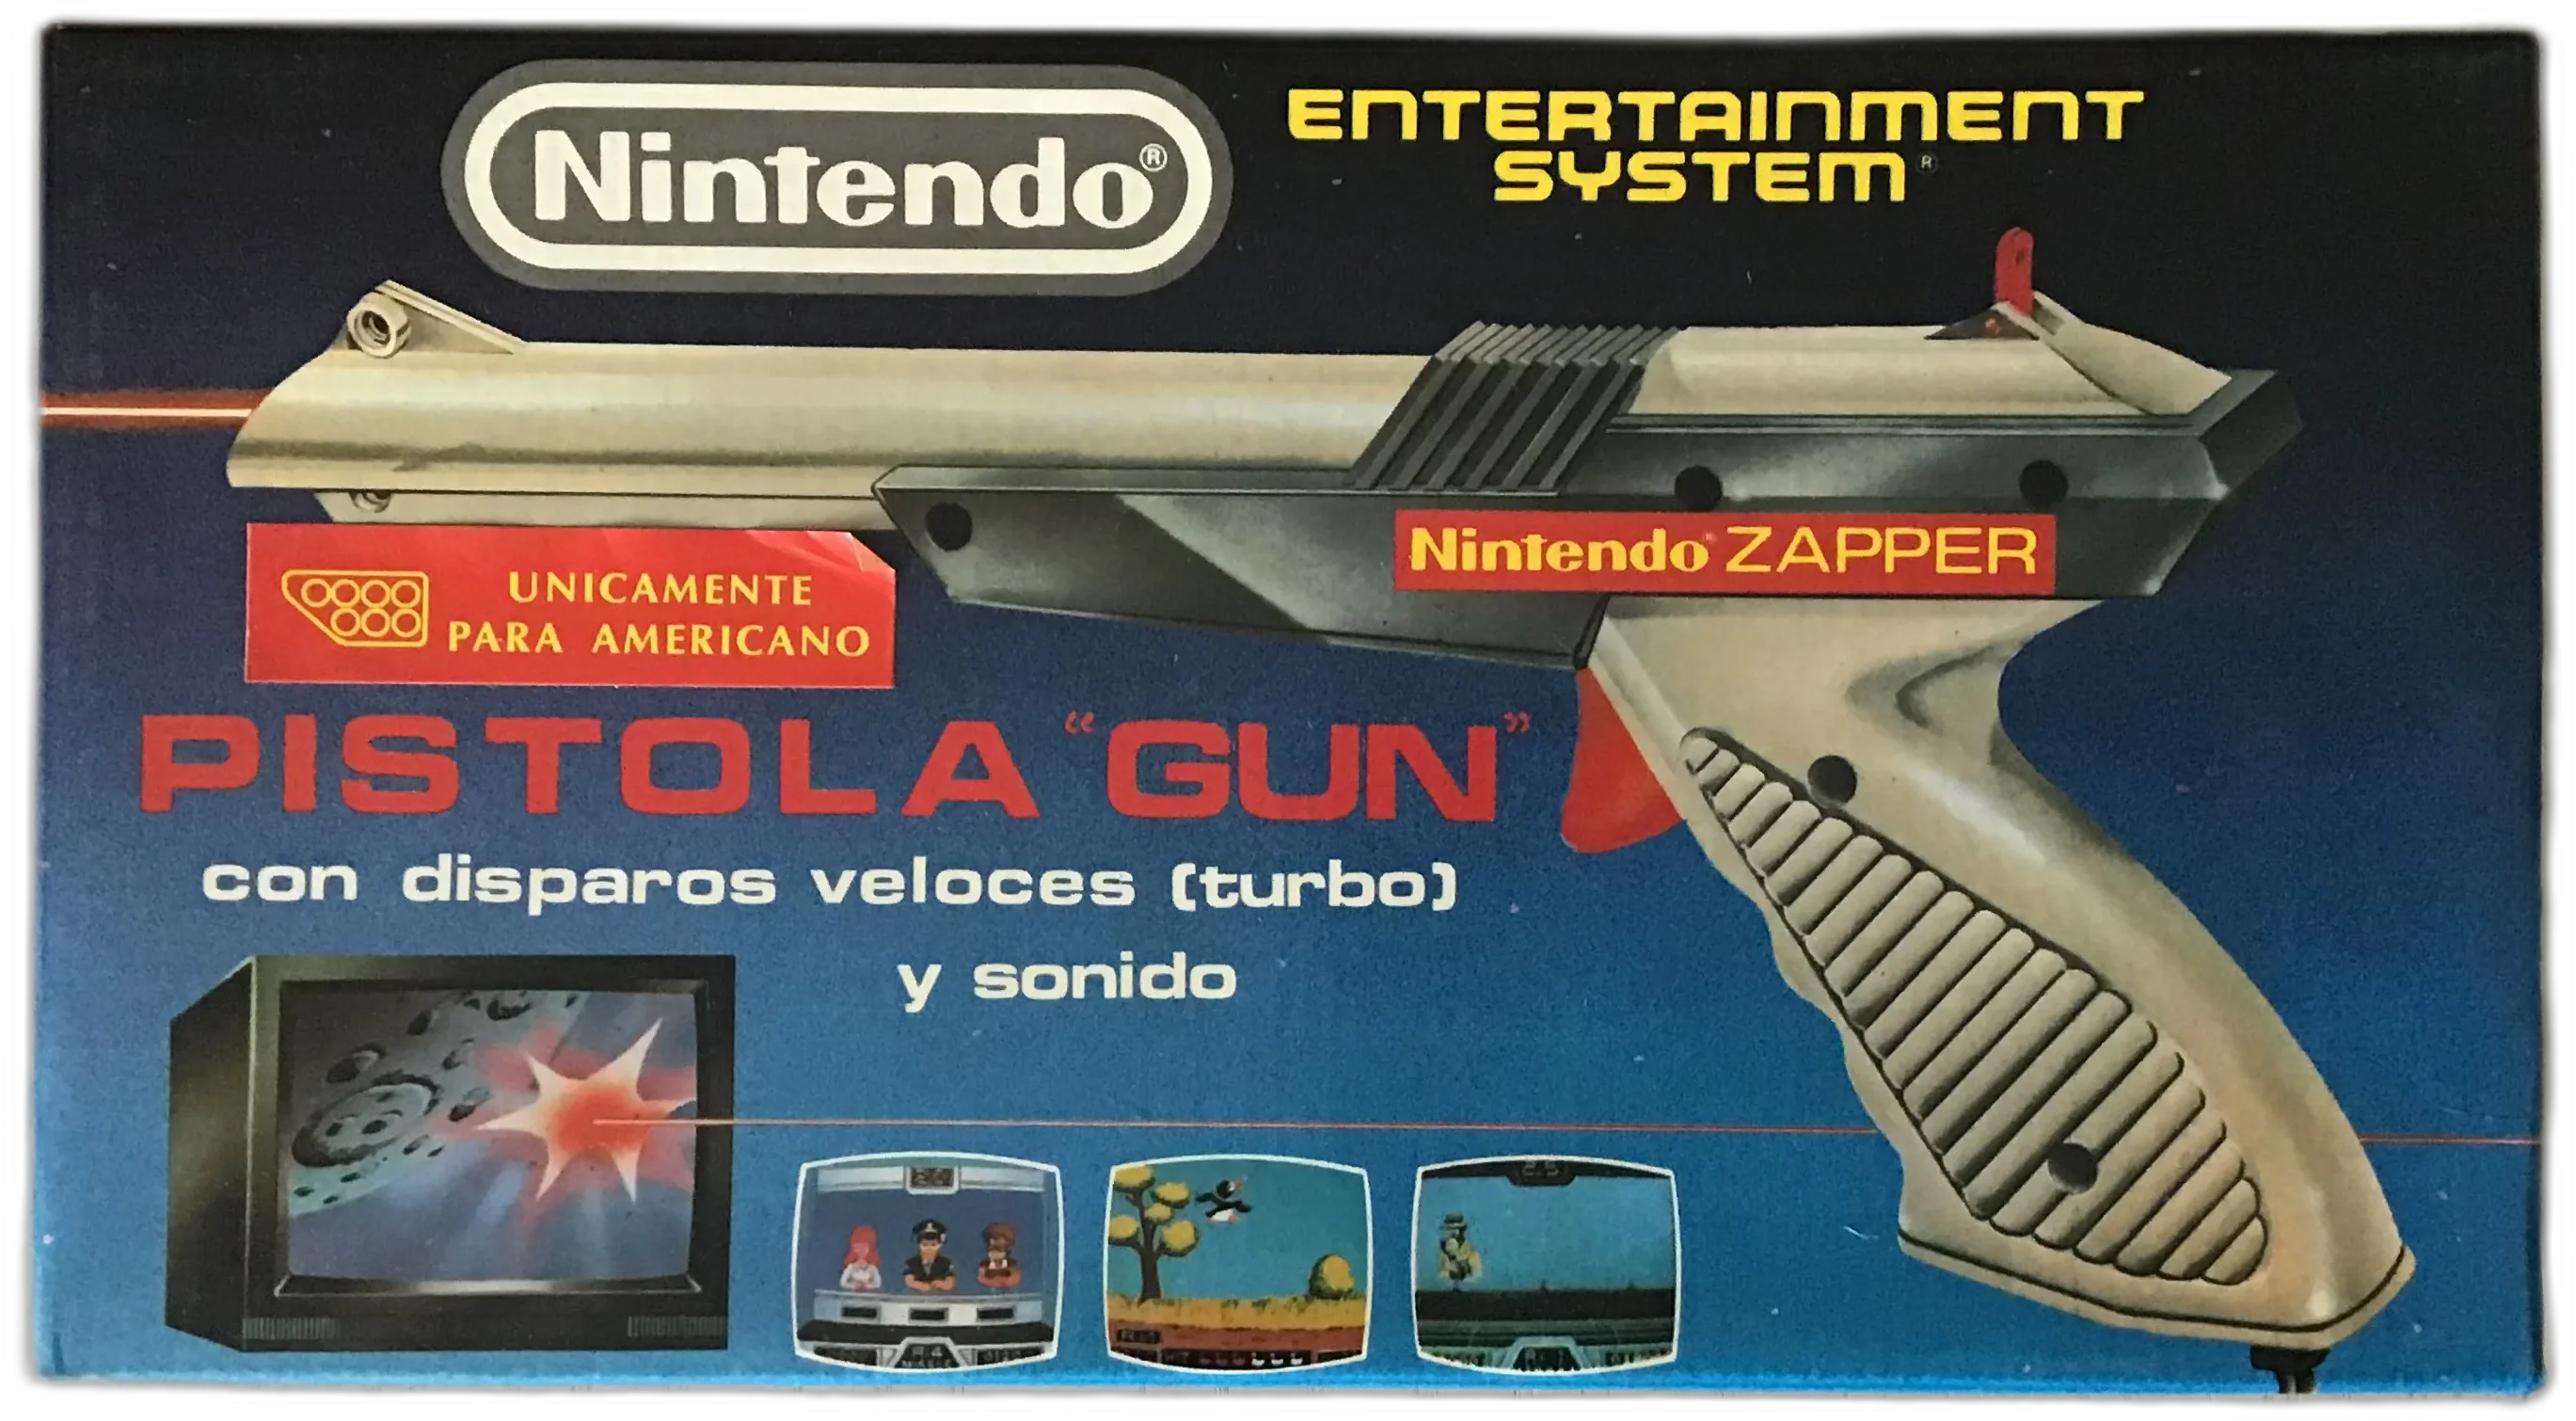  NES Zapper Pistola Gun